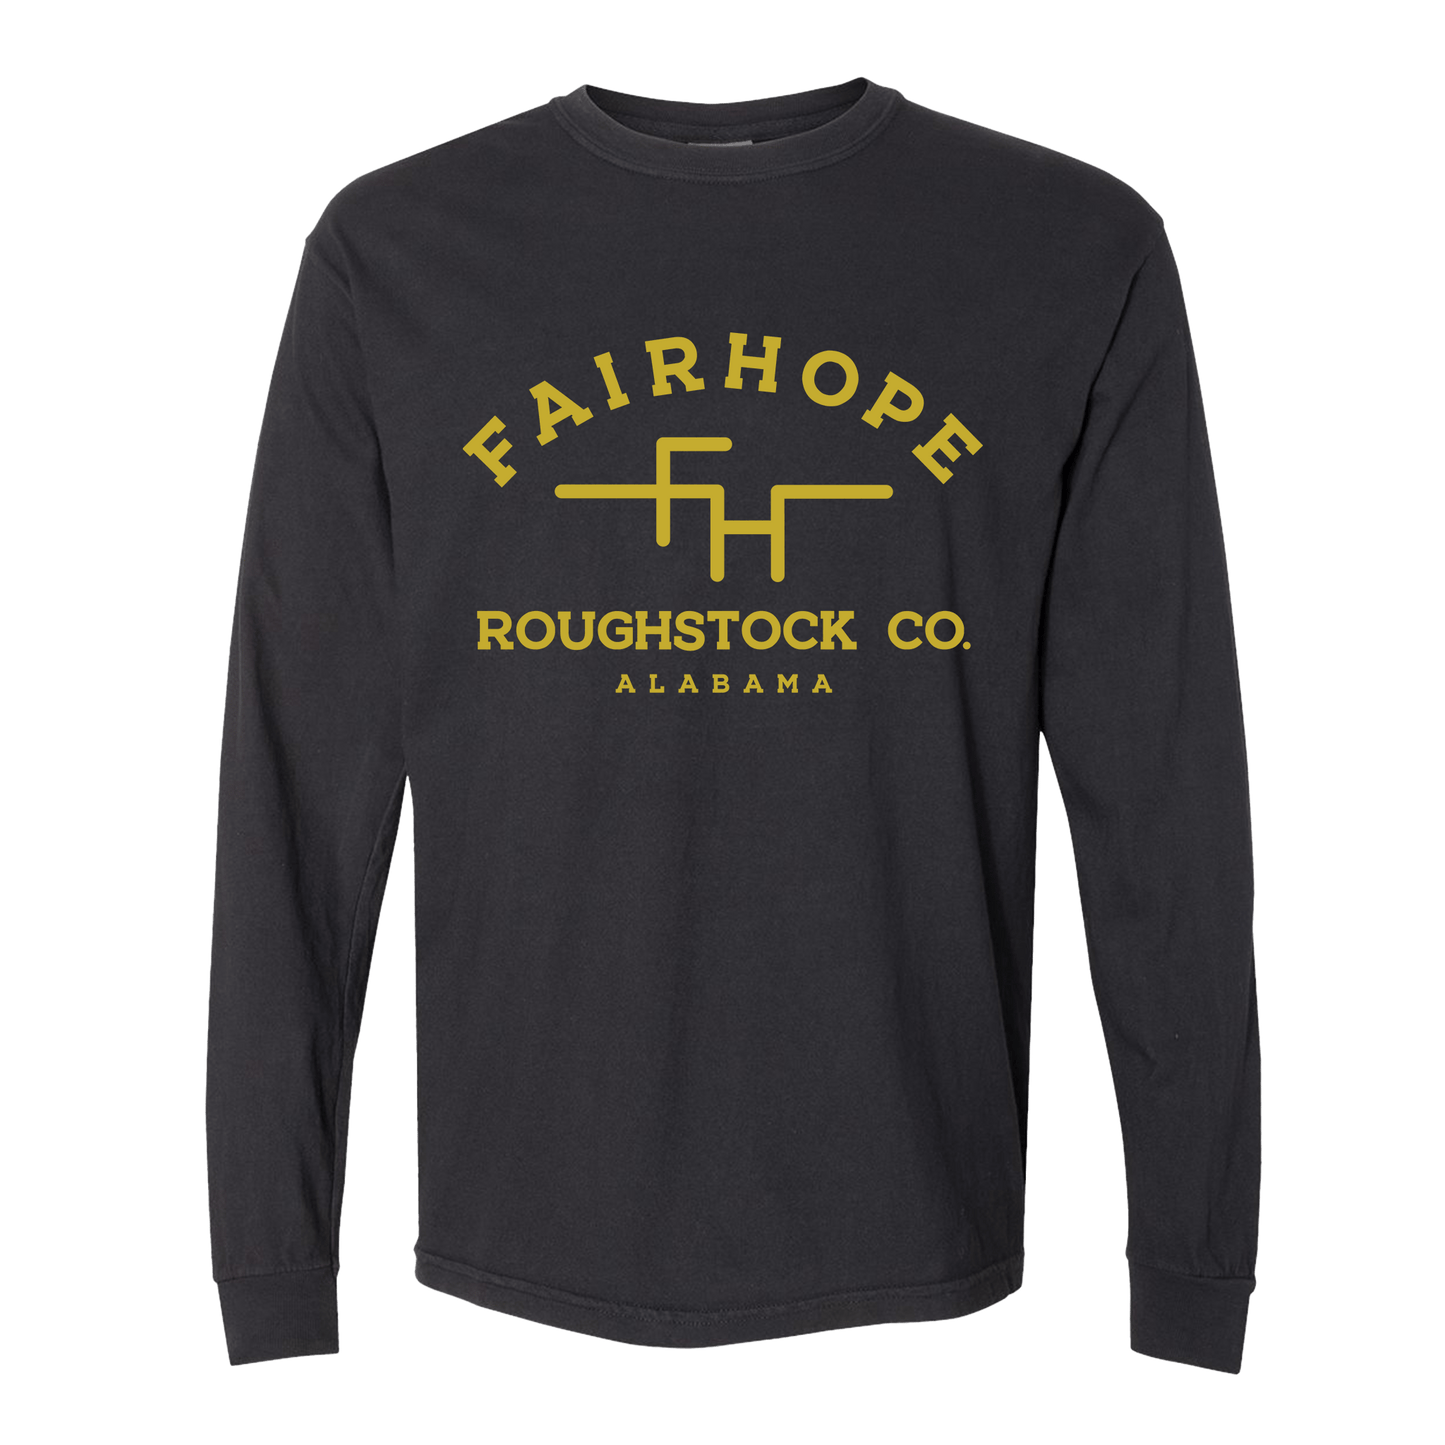 The “Brand” Long Sleeve Tee - Fairhope Roughstock Company